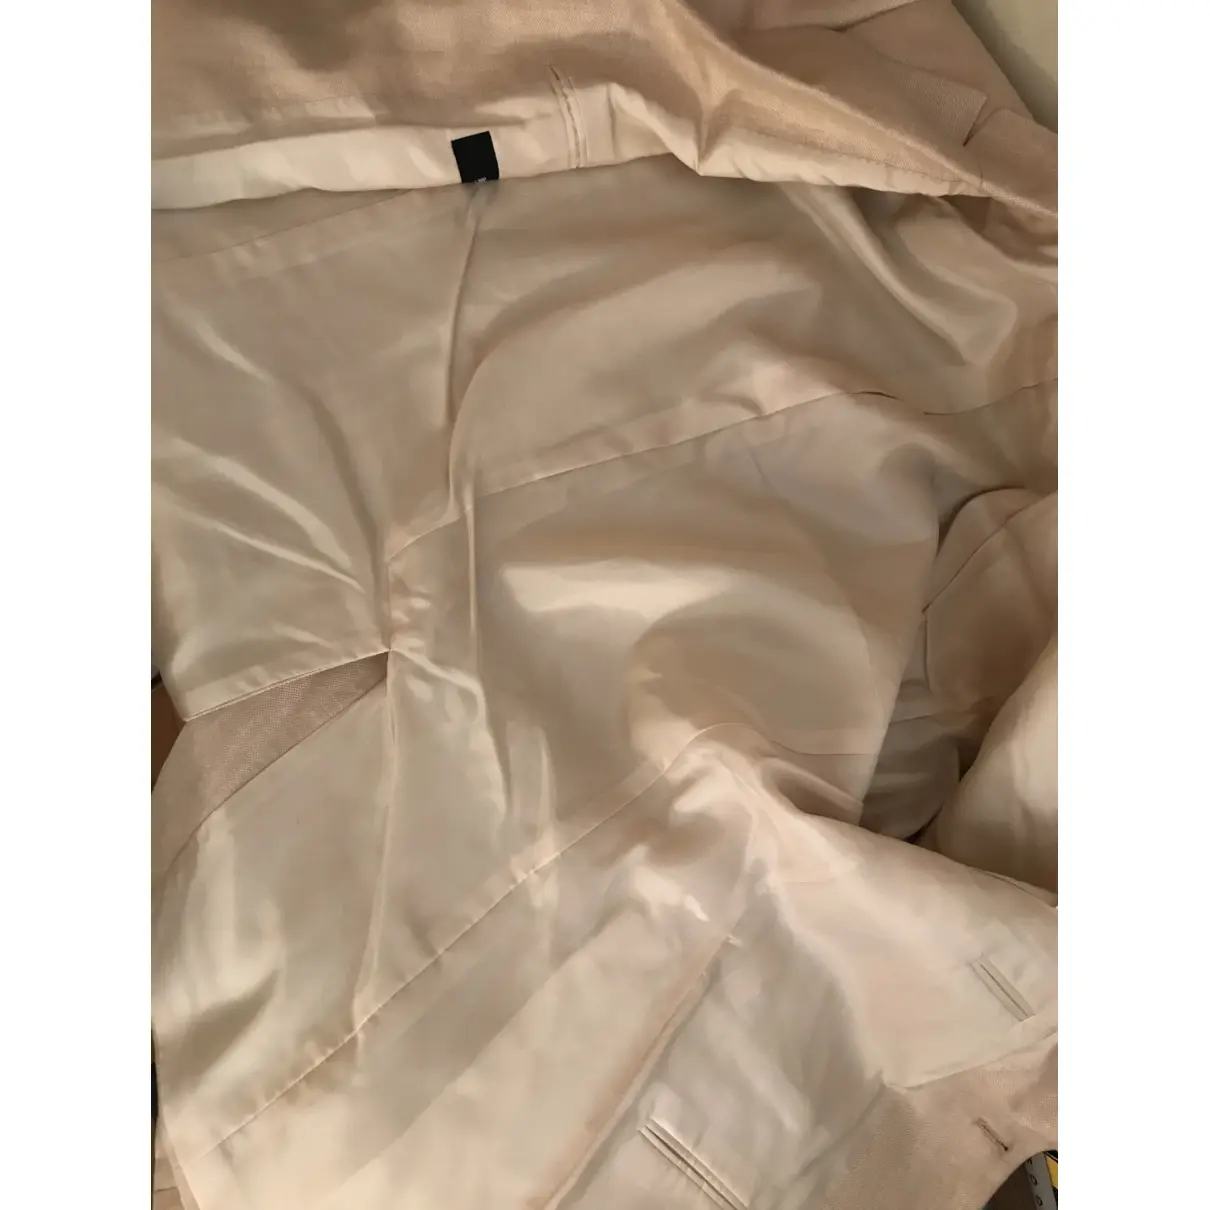 Boss Linen vest for sale - Vintage